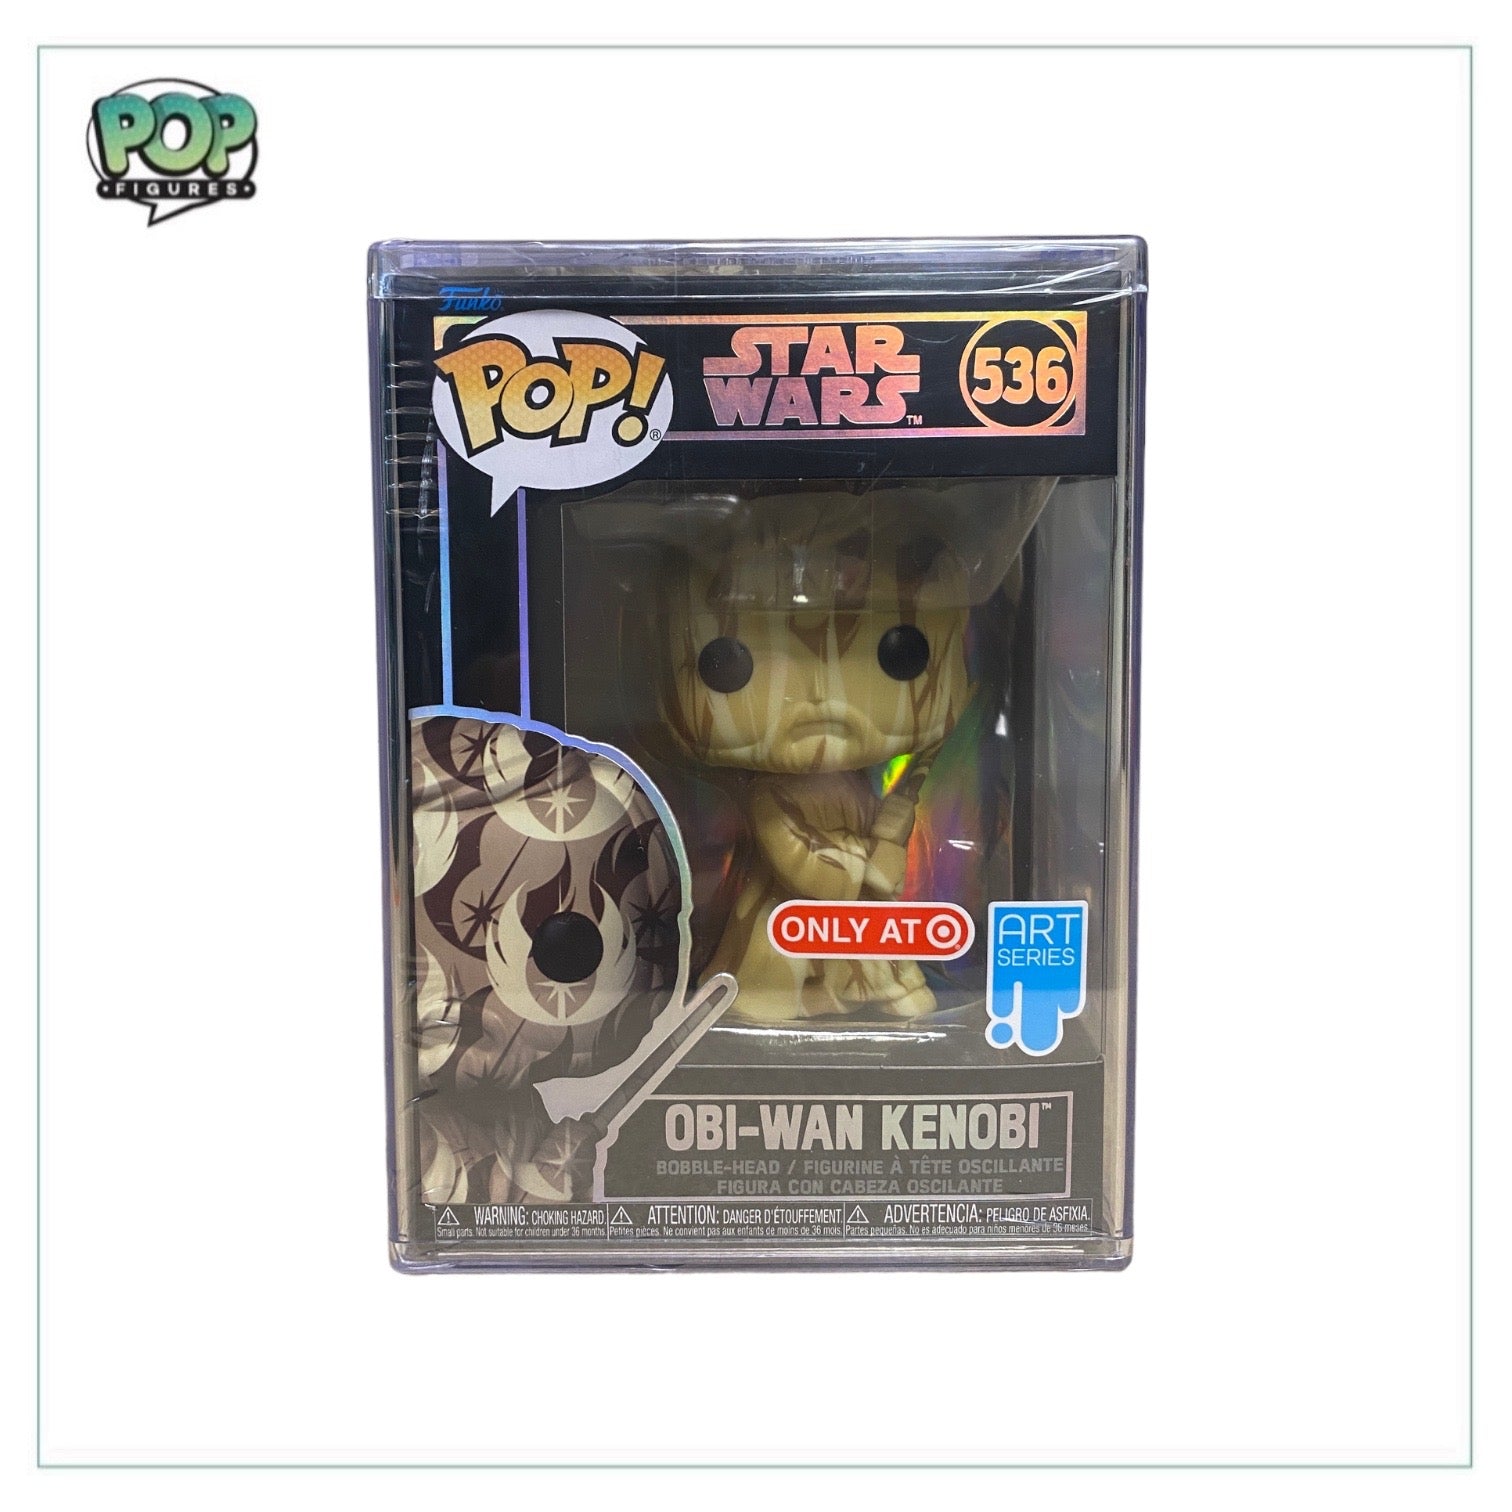 Obi-Wan Kenobi #536 (Art Series) Funko Pop! - Star Wars - Target Exclusive